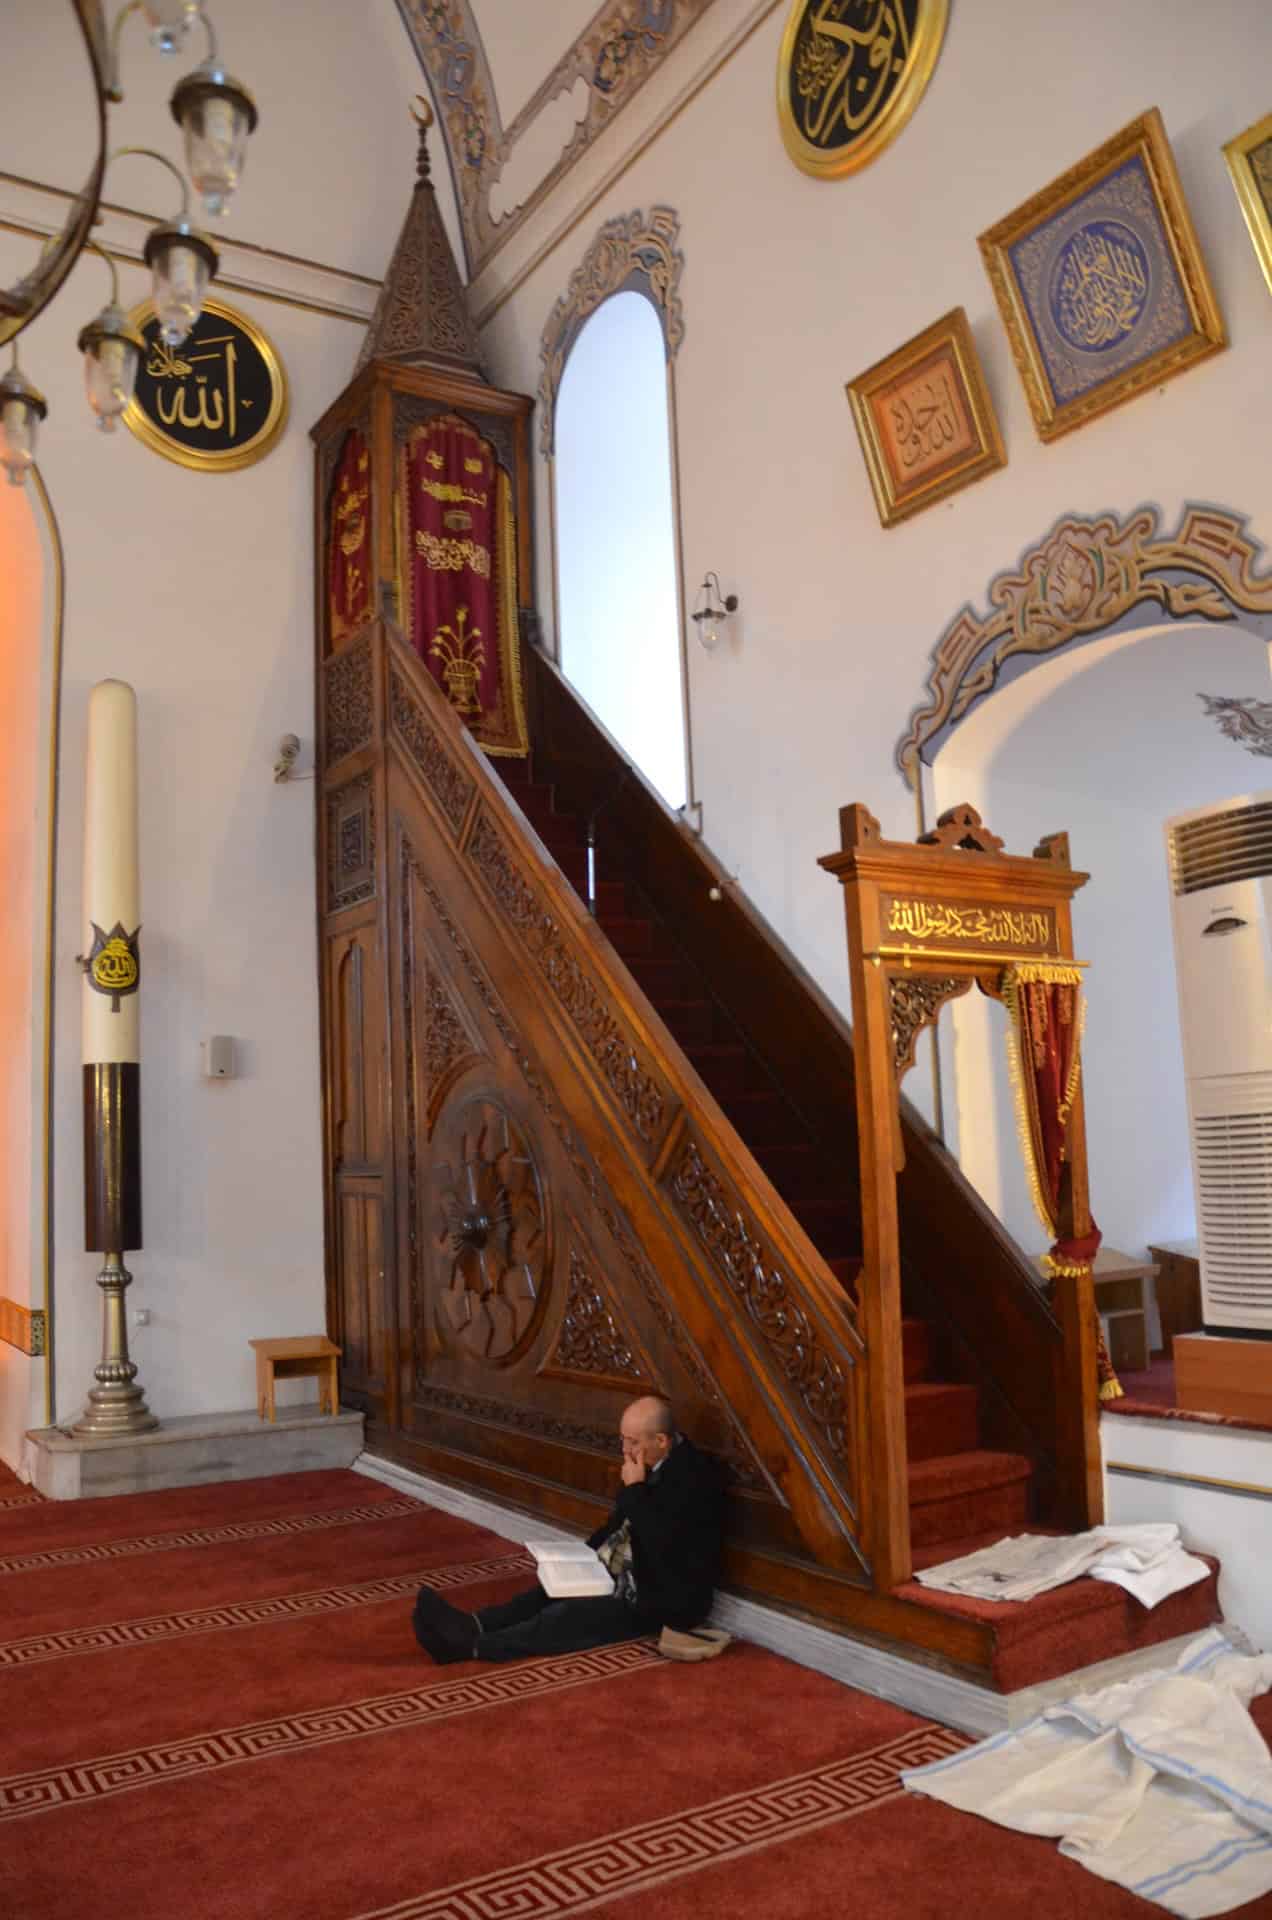 Minbar of the Hüdavendigâr Mosque in Çekirge, Bursa, Turkey